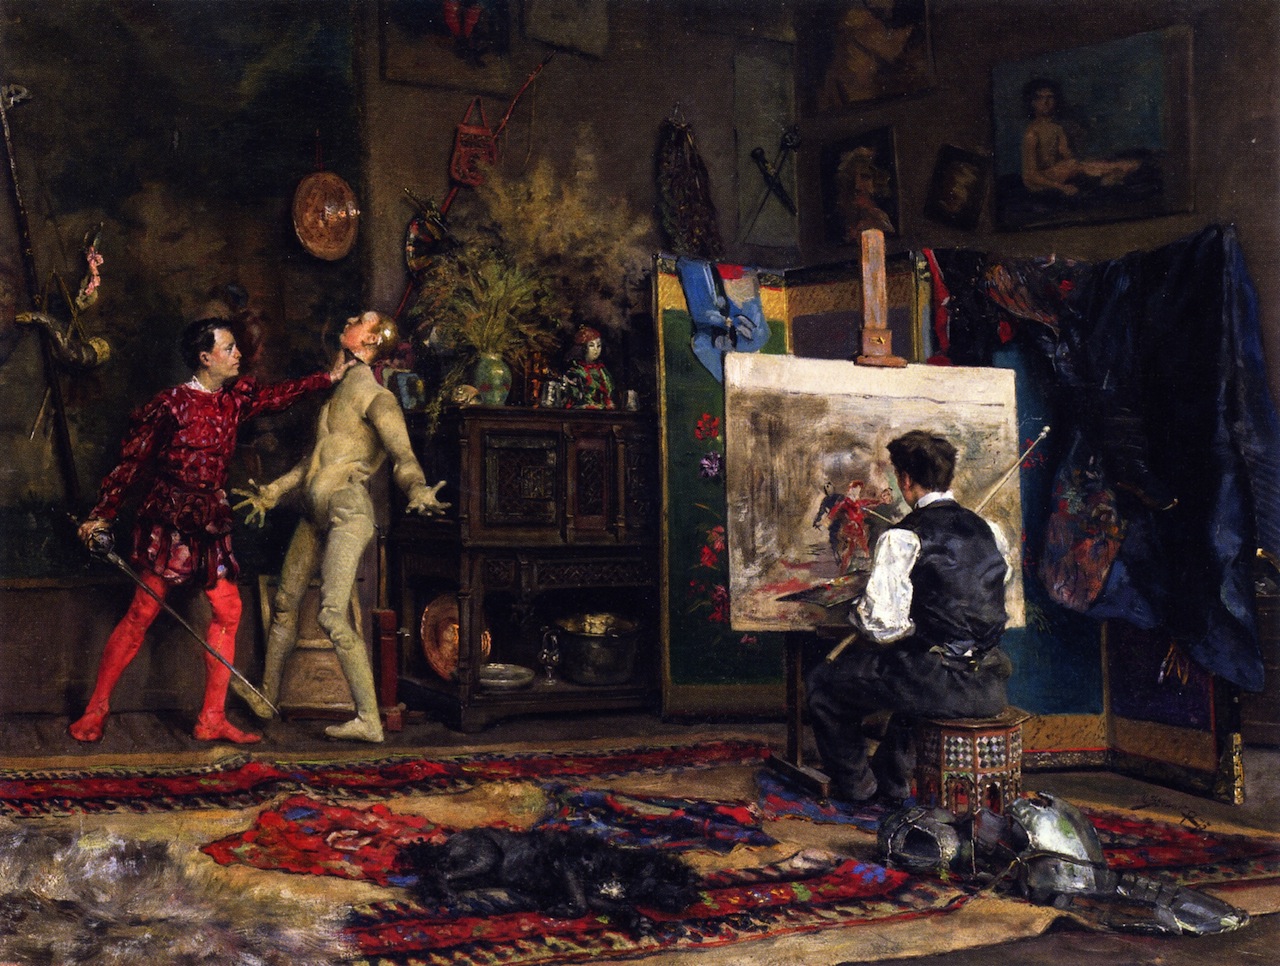 Julius LeBlanc Stewart, In the Artists Studio, 1875